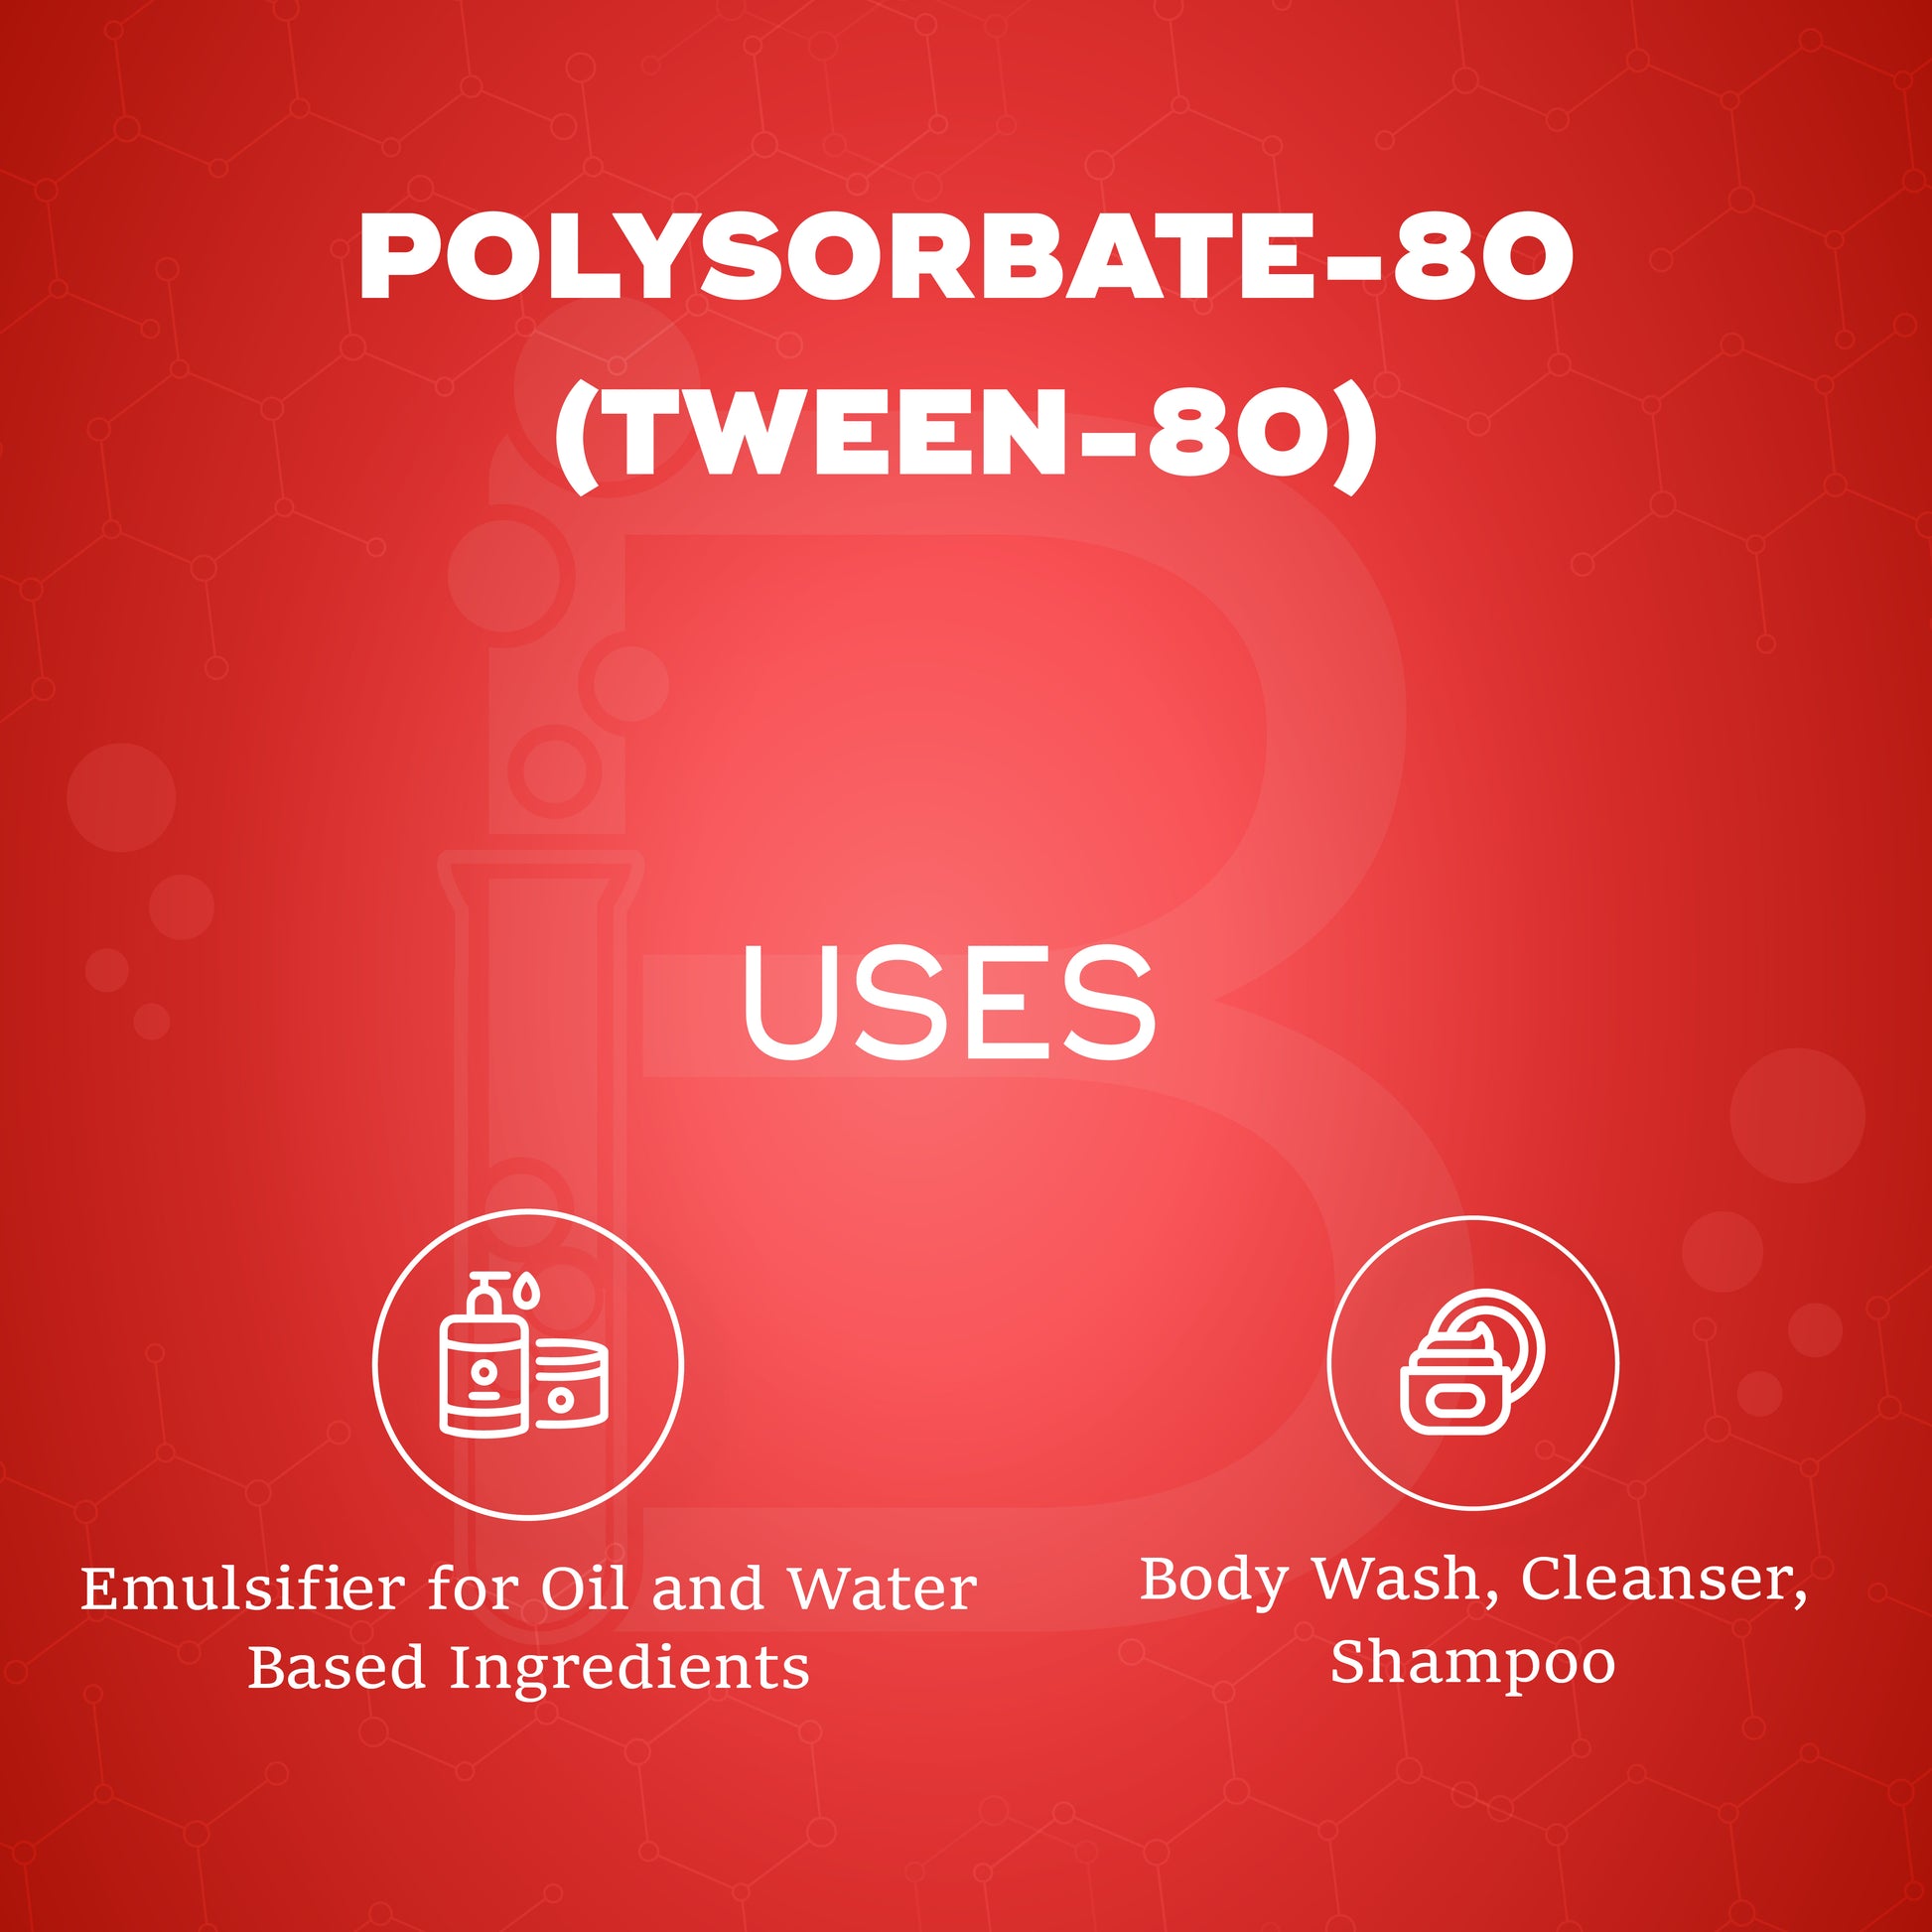 POLYSORBATE 80 T-MAZ 80 TWEEN 80 Surfactant Emulsifier 100% Pure